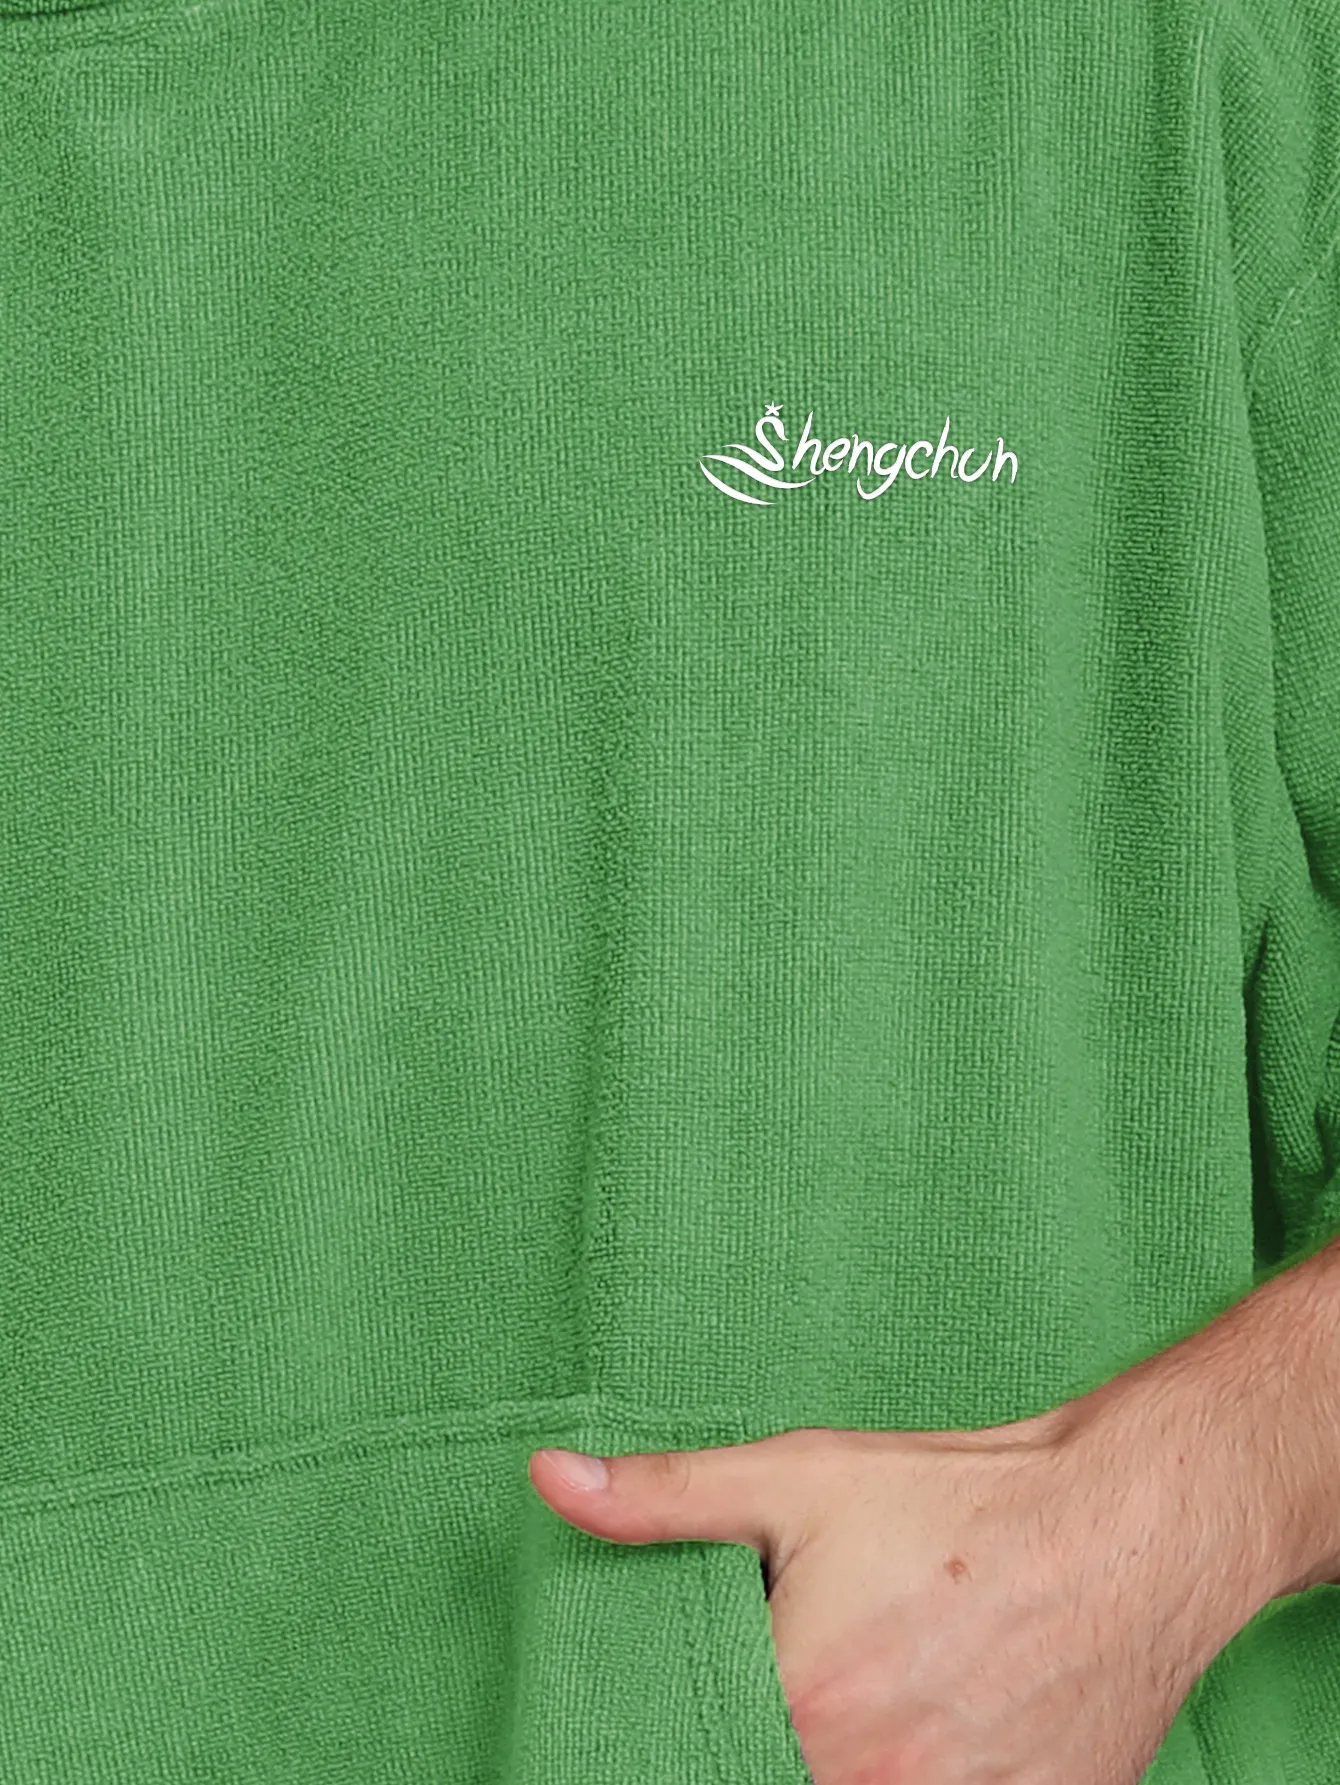 surf soft portable durable poncho towel sand free With Logo Custom Print Poncho towel surfing Microfiber Beach Towel